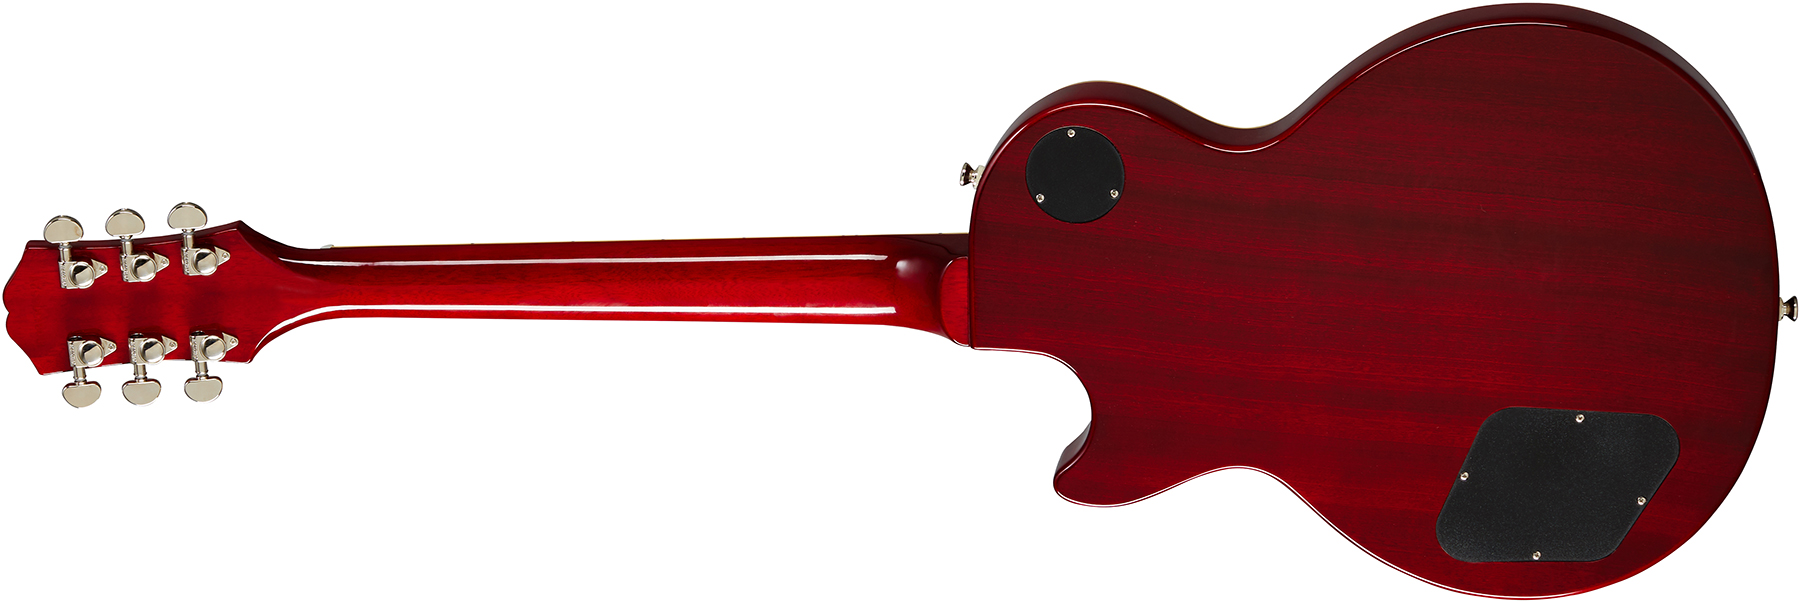 Epiphone Les Paul Standard 60s Gaucher 2h Ht Rw - Iced Tea - Left-handed electric guitar - Variation 1